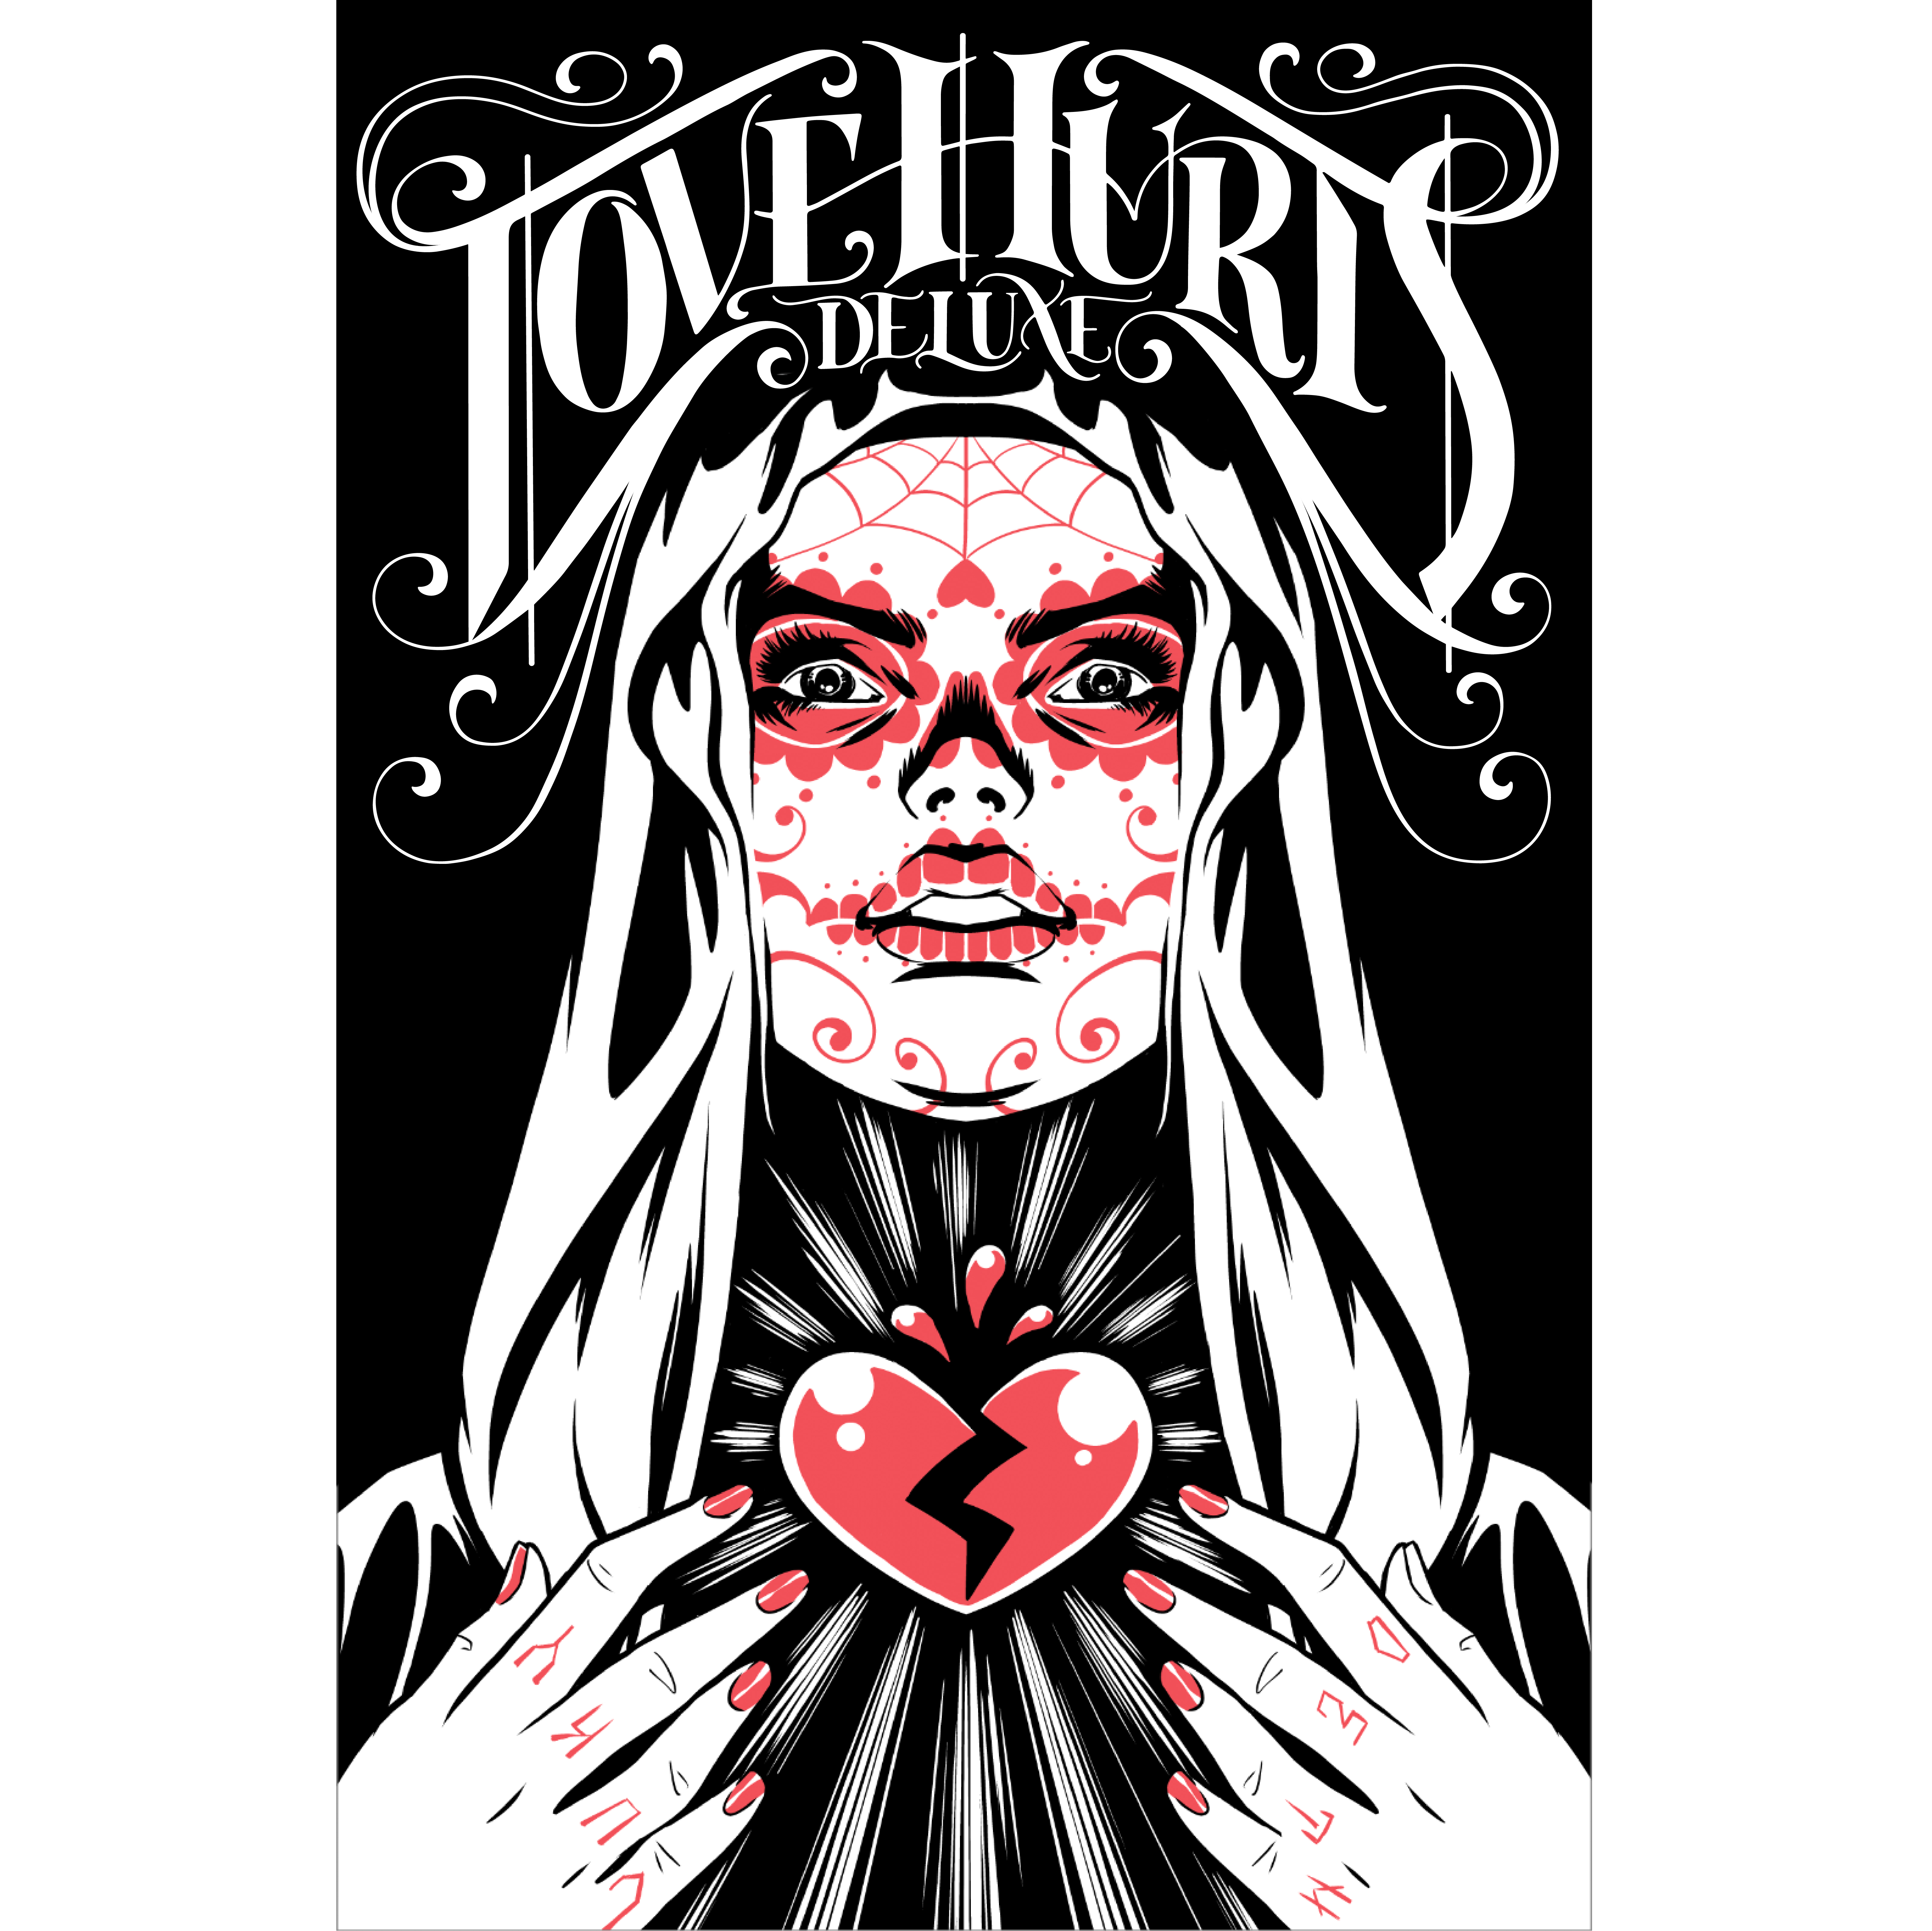 love hurts deluxe KimWAndersson comic artist romantic horror lettering title book artwork